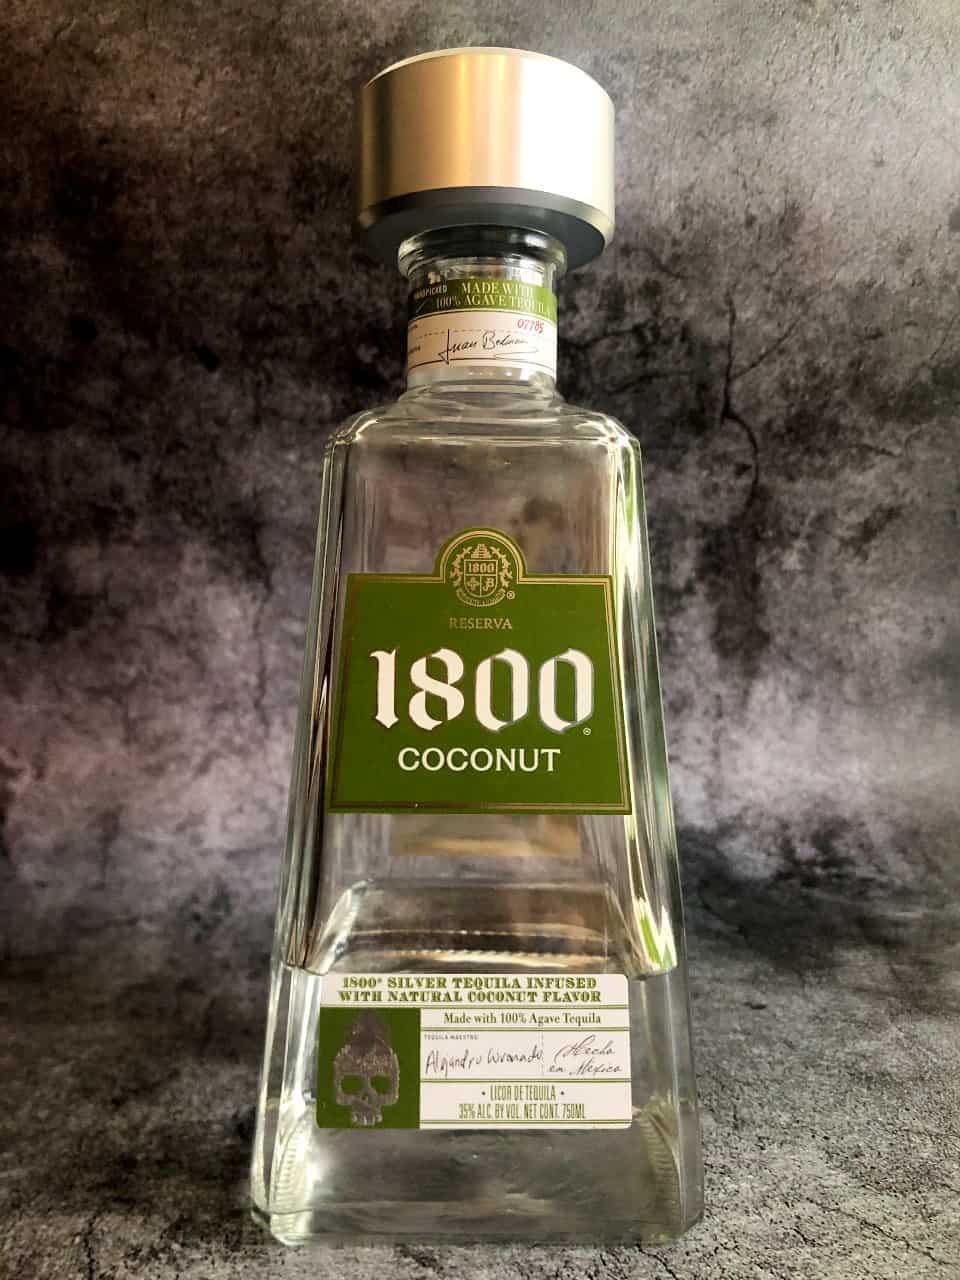 1800 coconut tequila.